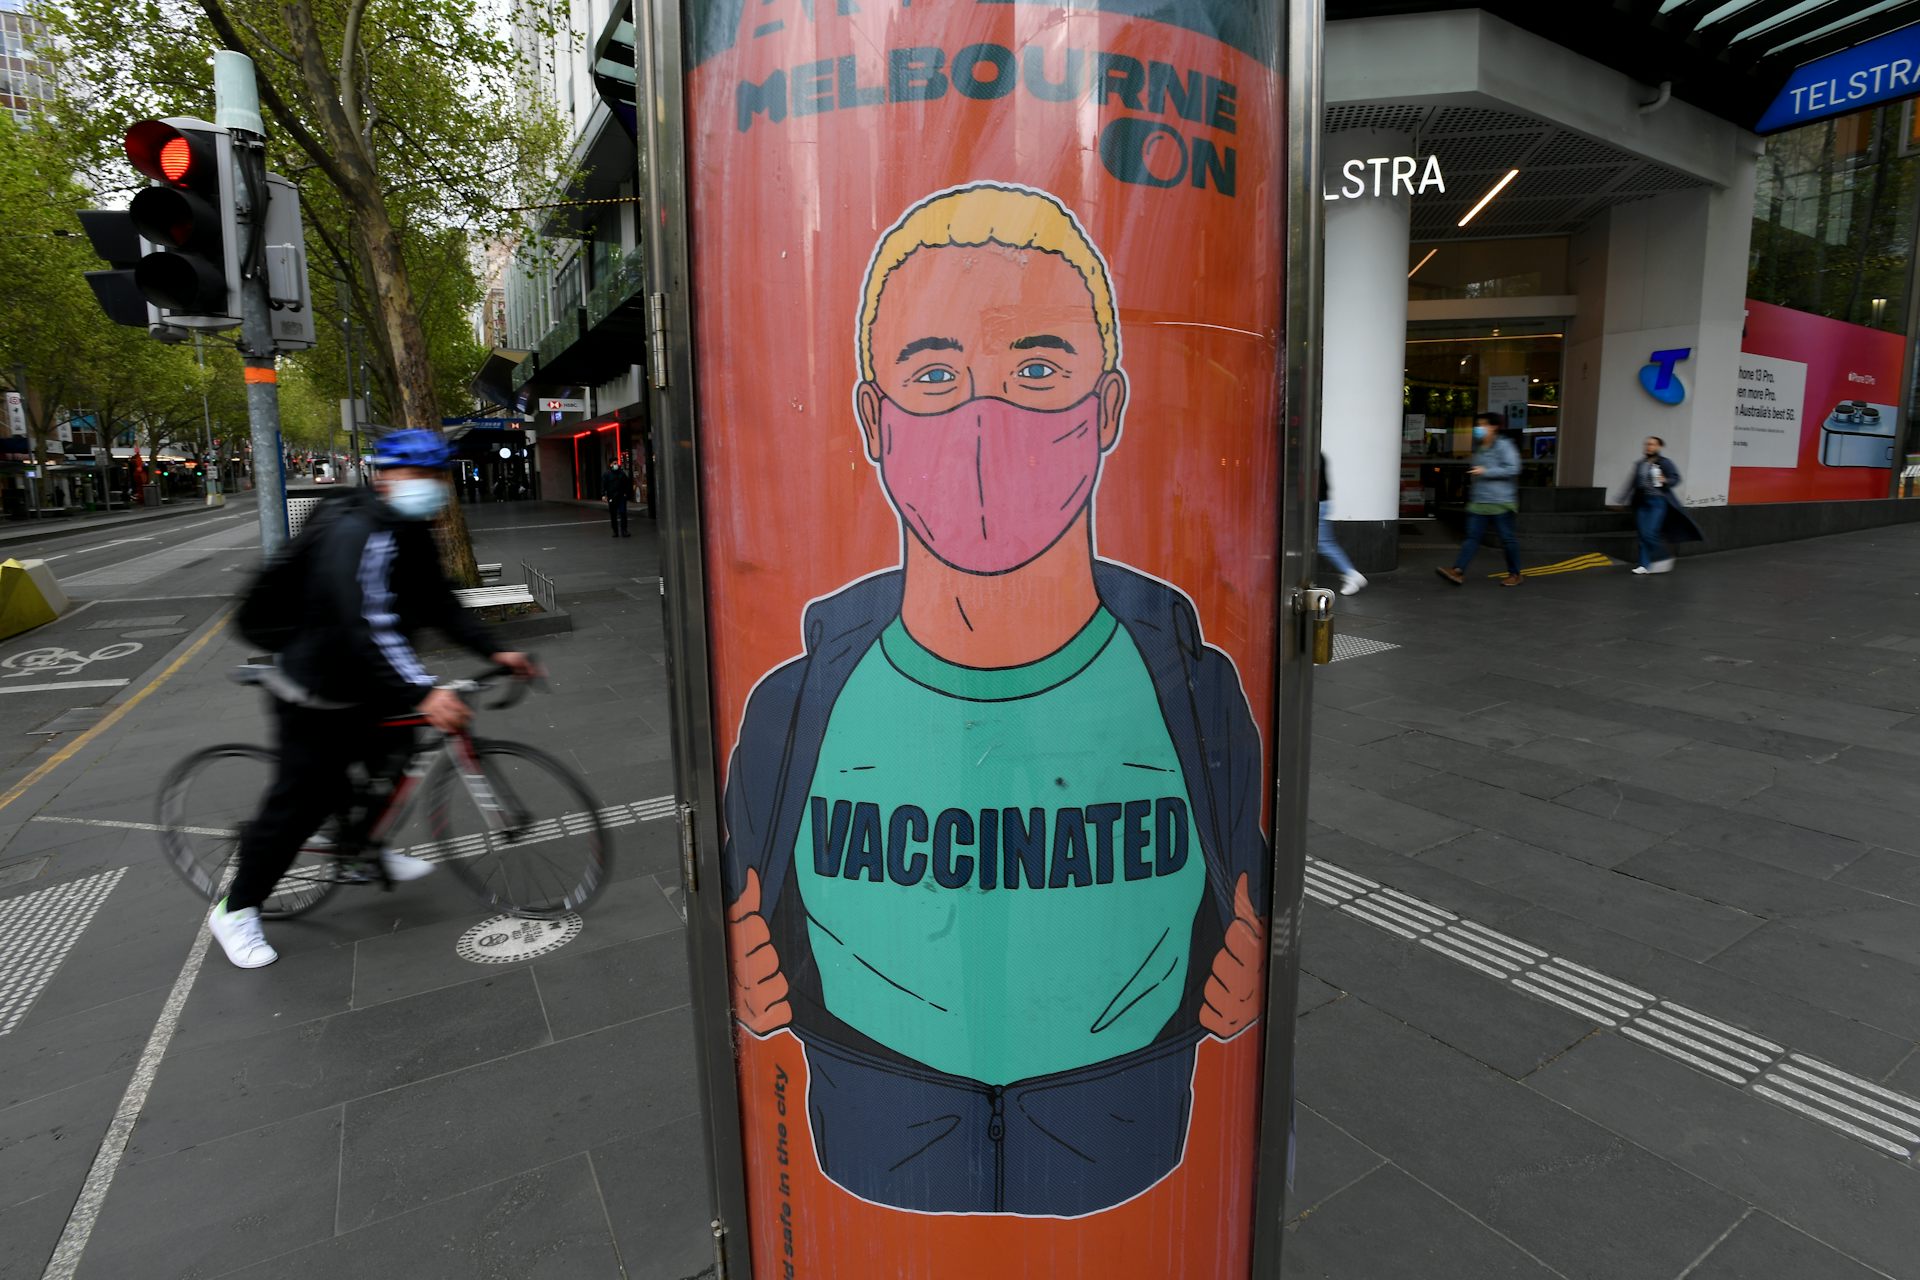 Vaccination poster in Melbourne's CBD.